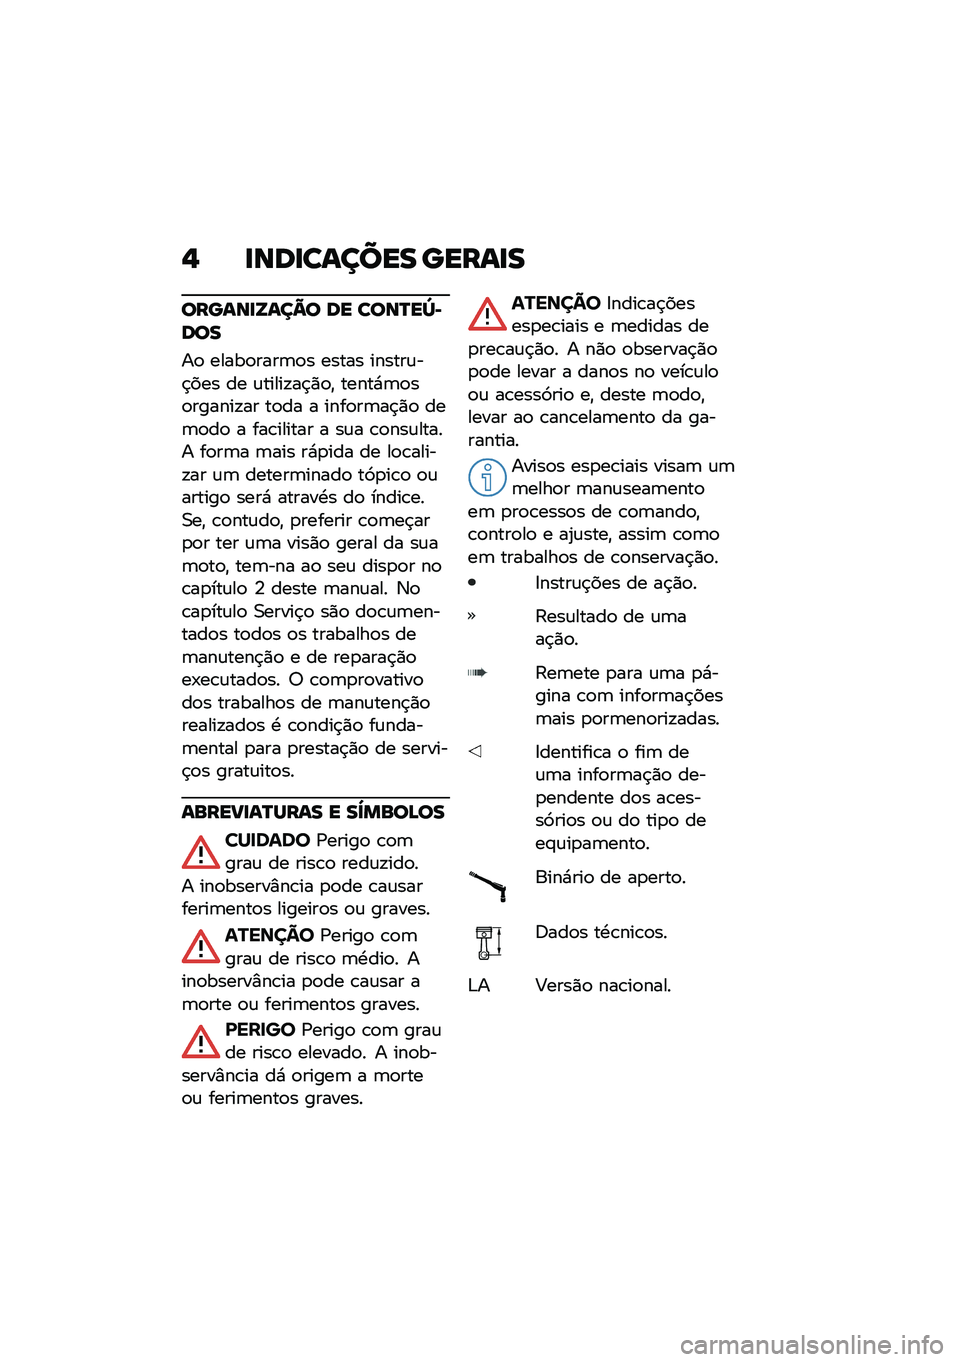 BMW MOTORRAD M 1000 RR 2021  Manual do condutor (in Portuguese) �, �
���
������ �����
�
������
�Y���?� �� ����O��b�*���
��
 �����
����	�
� ����� ������\f��$��� �� �\f�����!��$�)�
�" �����*�	�
��
��